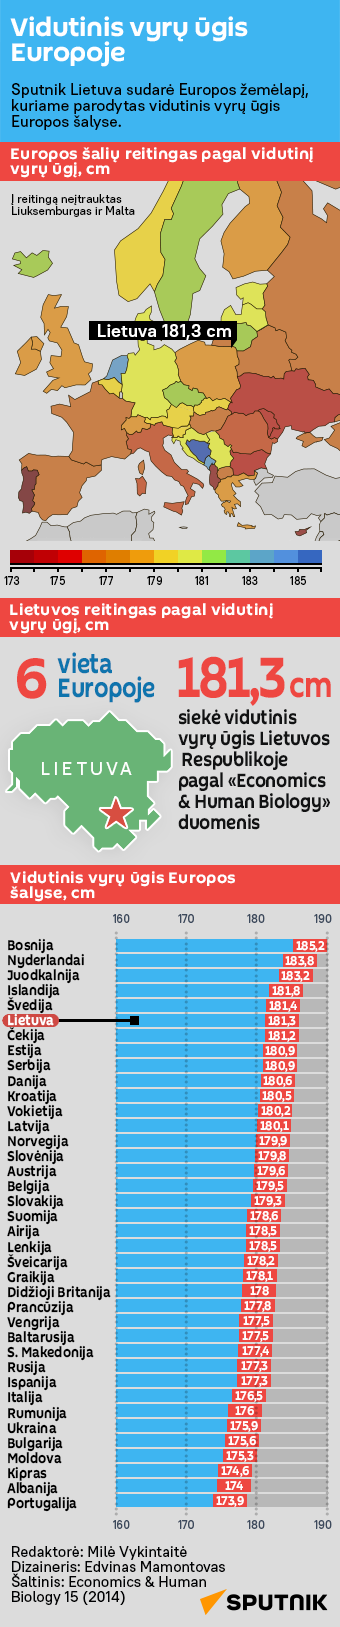 Vidutinis vyrų ūgis Europoje - Sputnik Lietuva